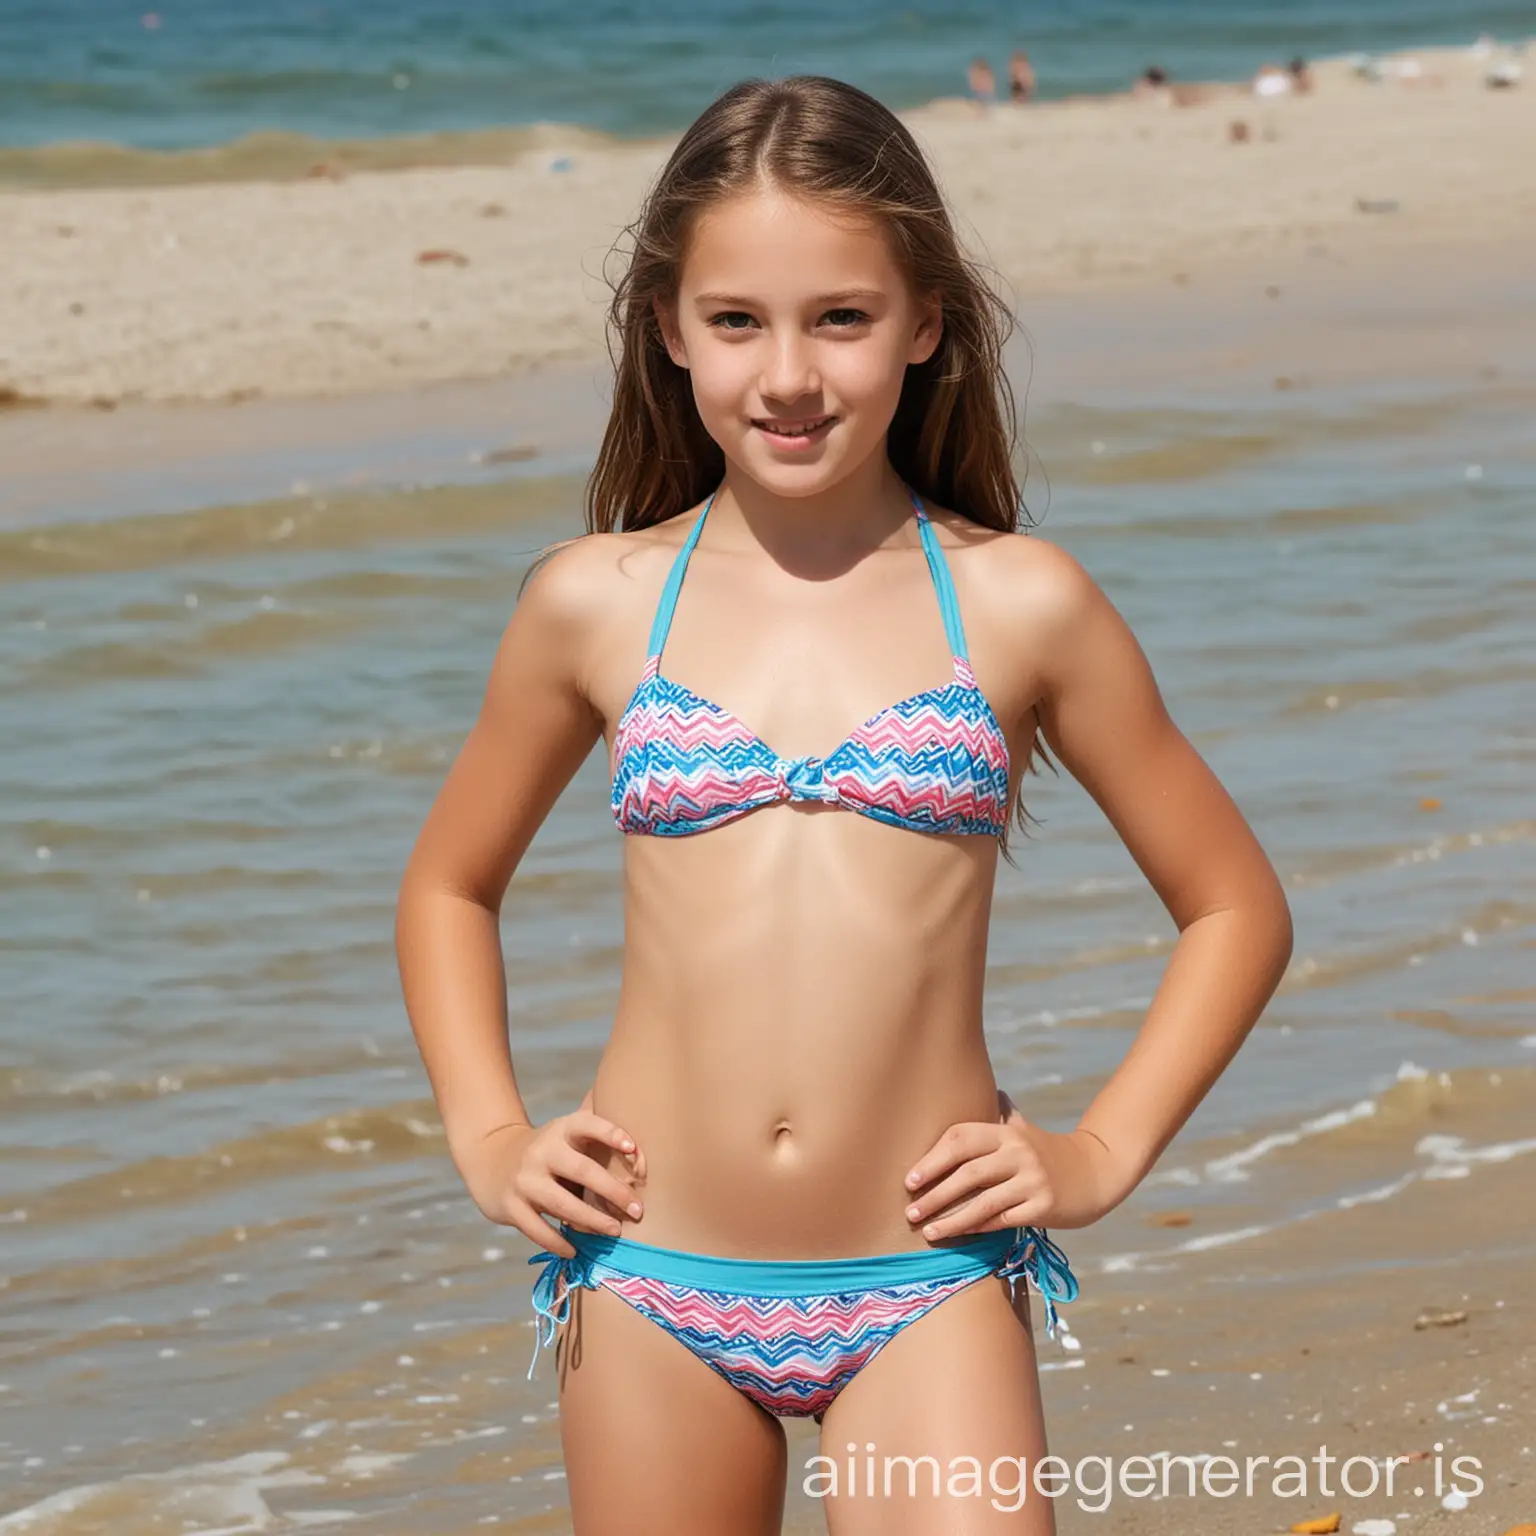 european preteen in bikini at the beach